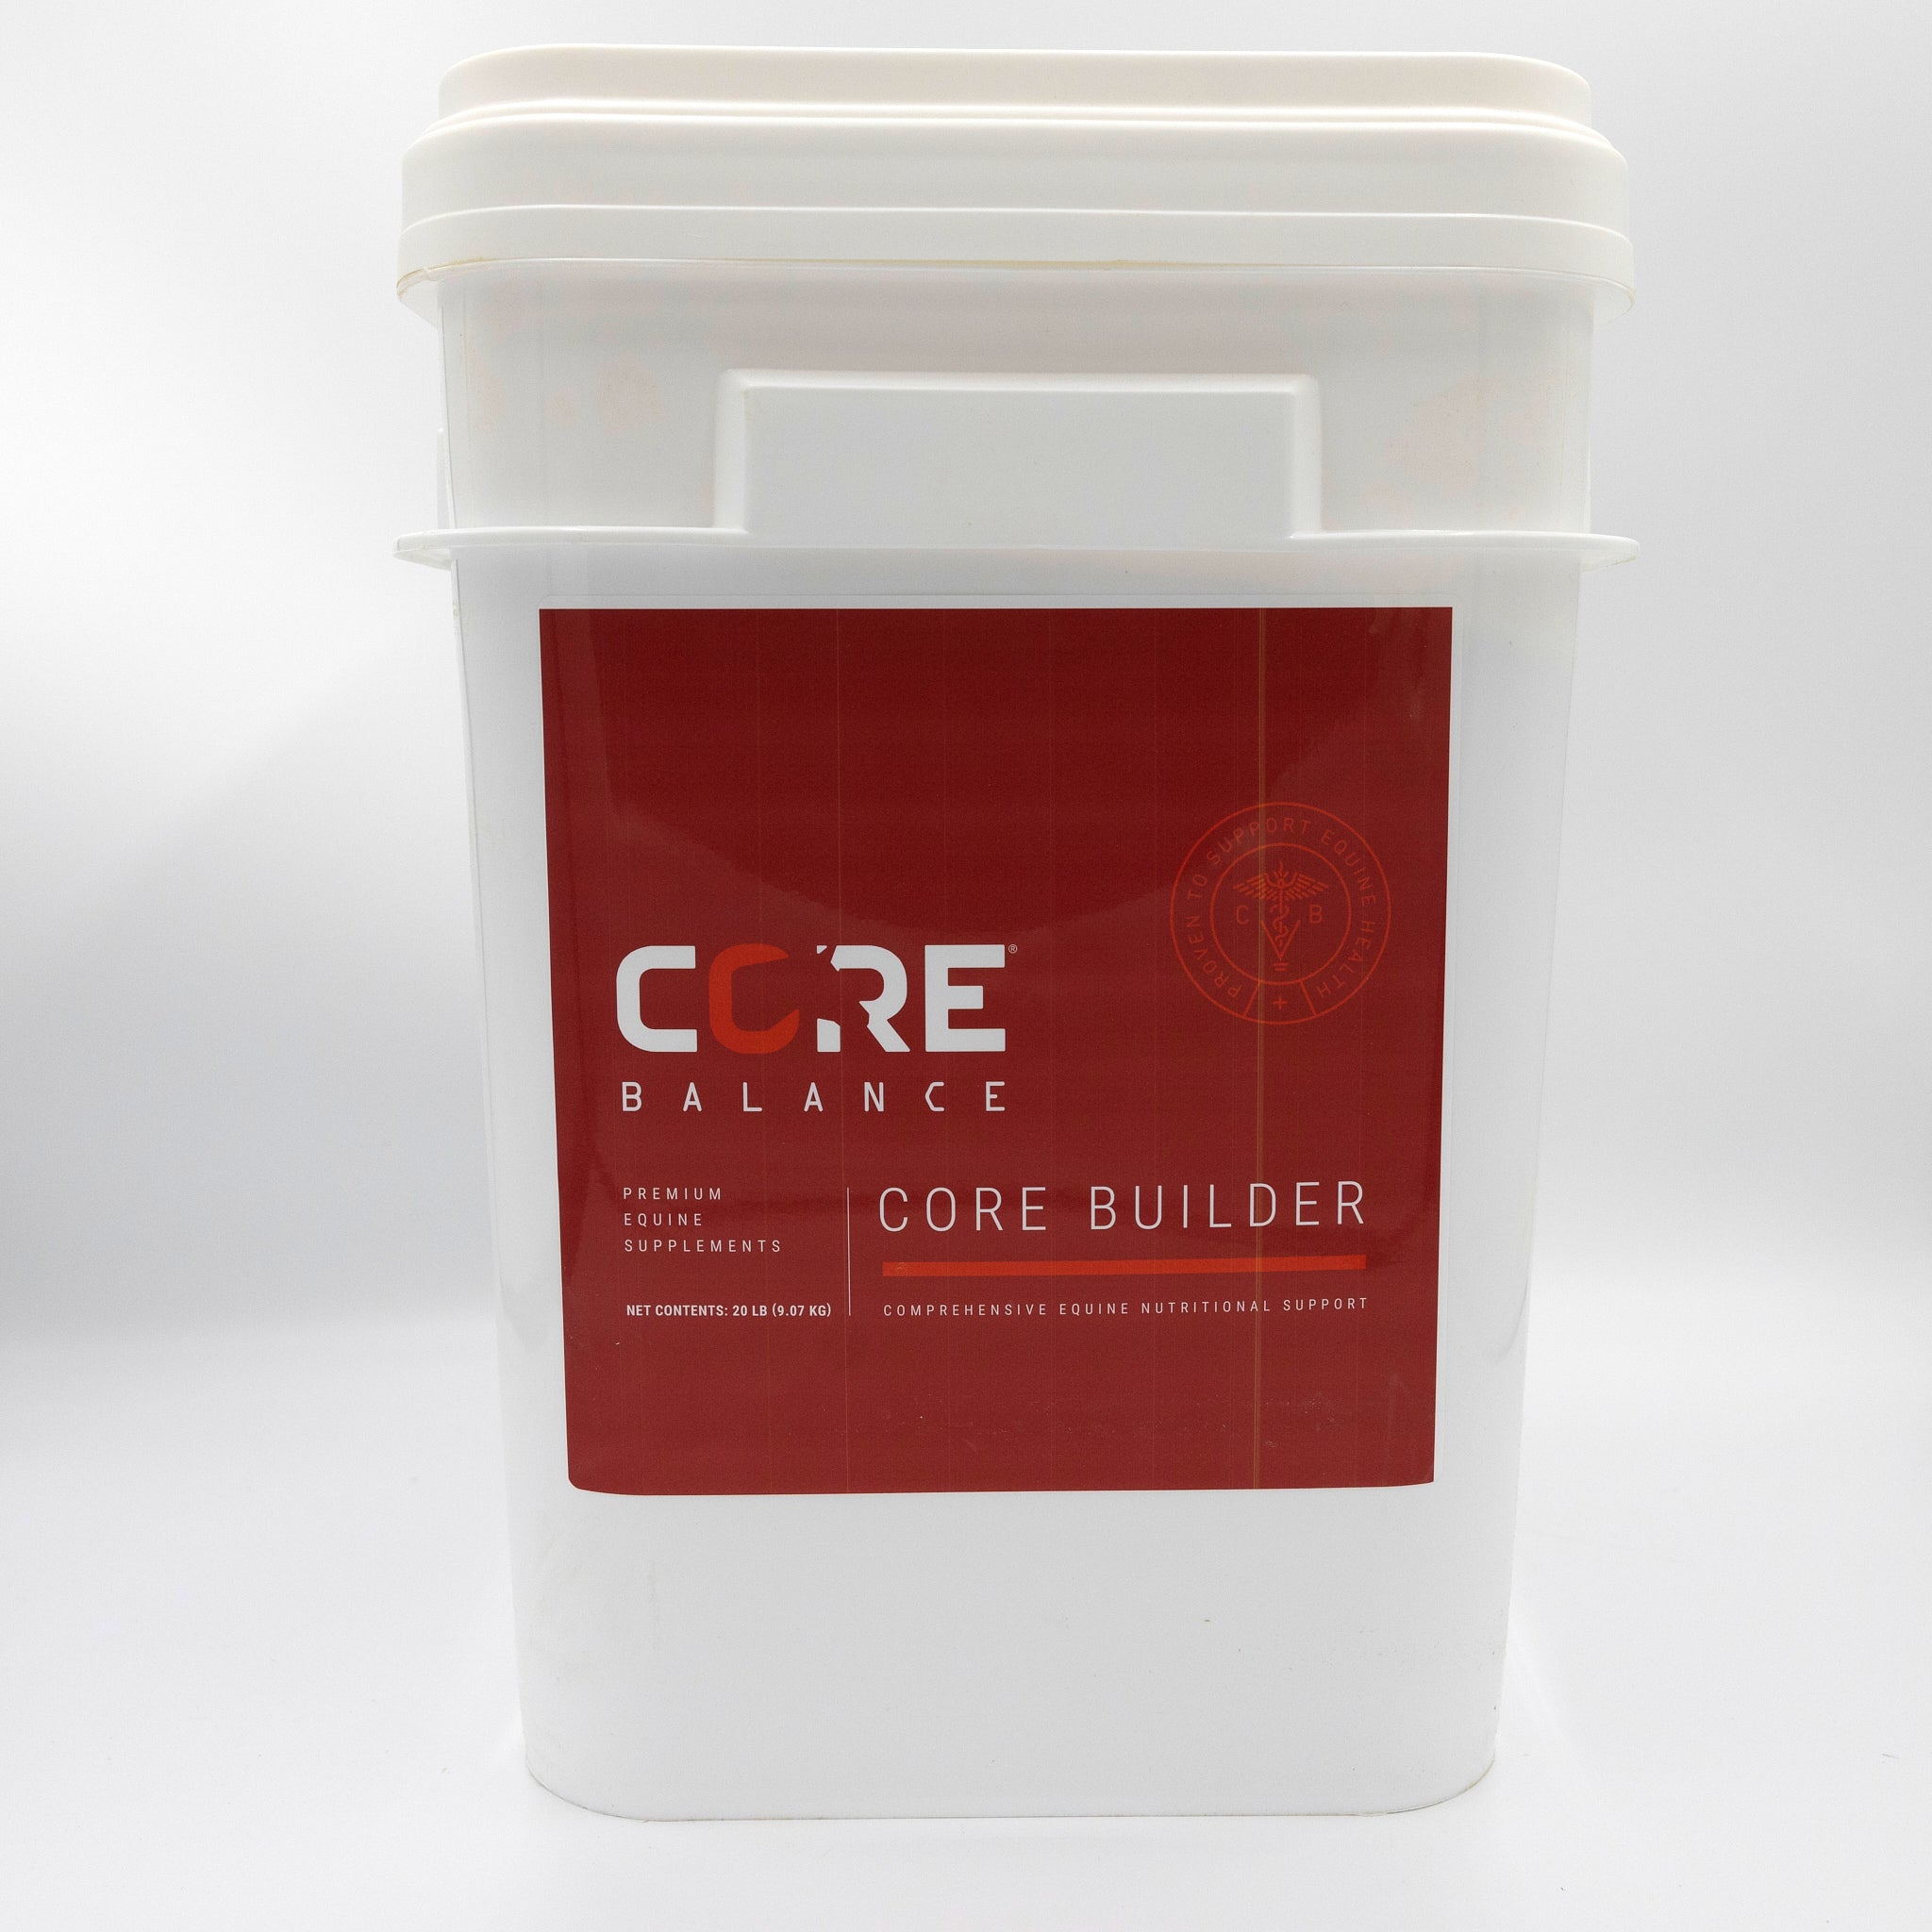 Core Builder